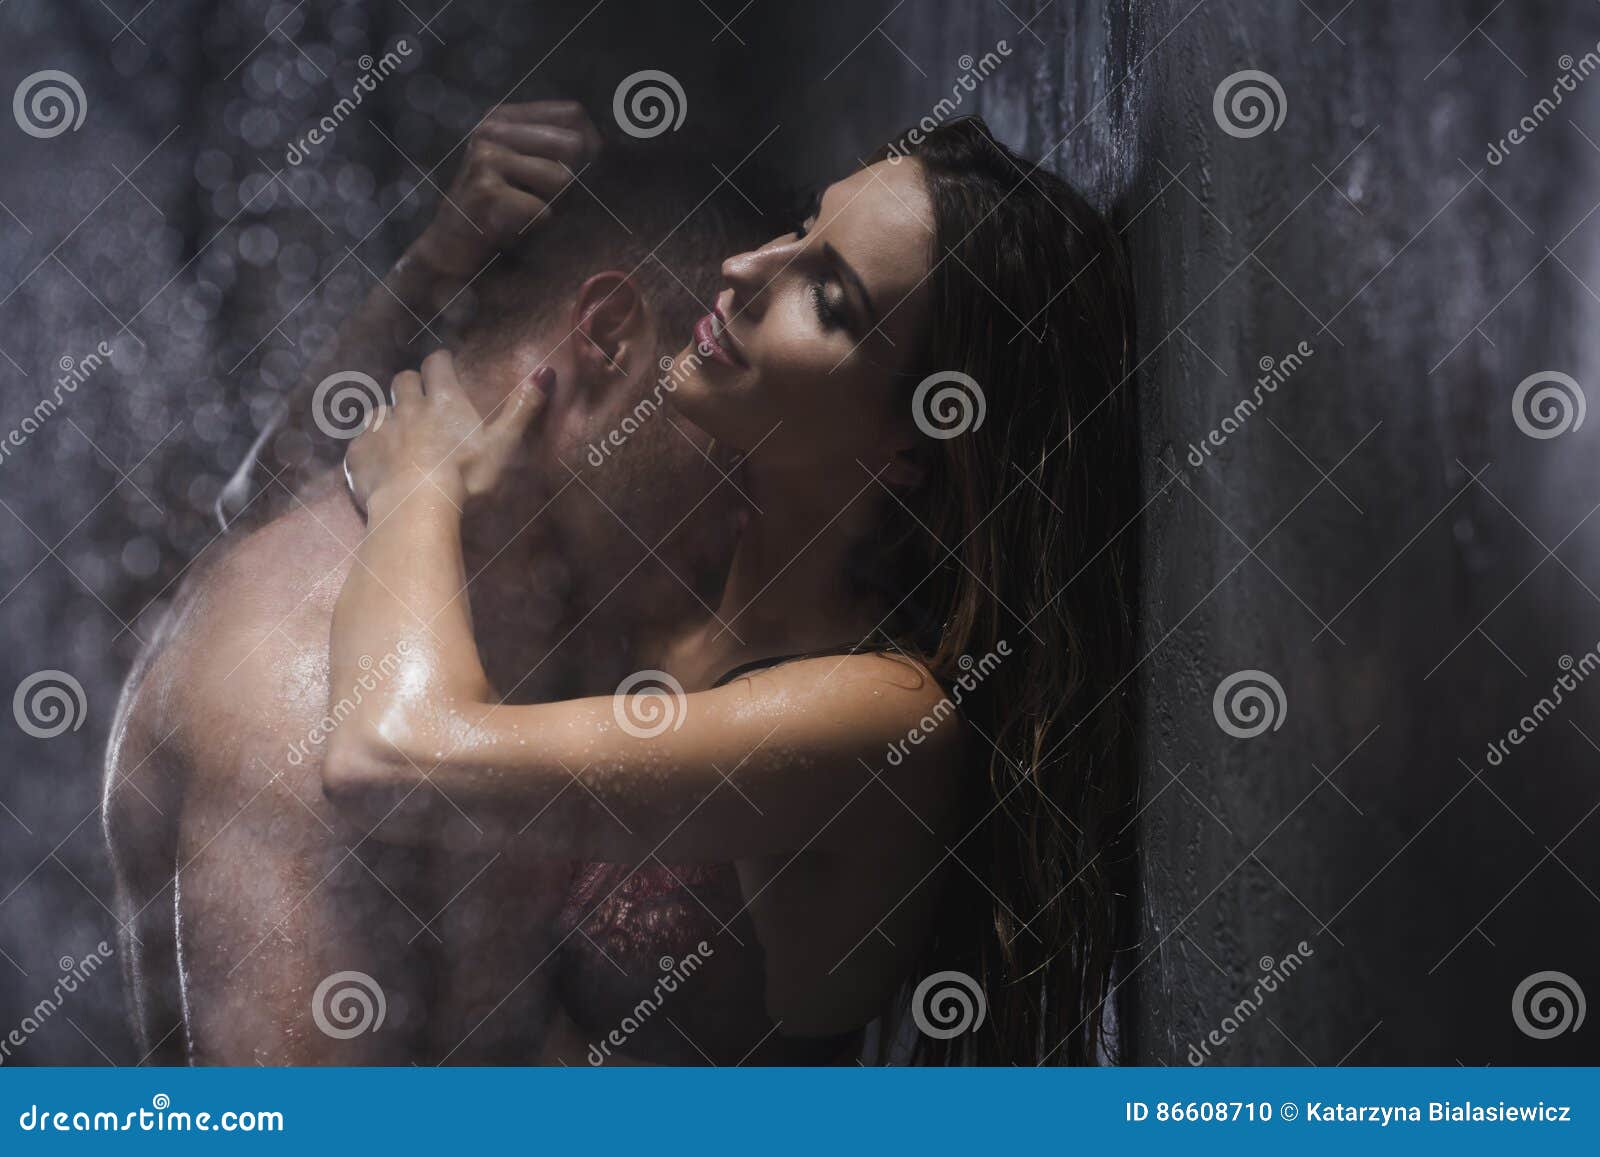 shower selfie couple